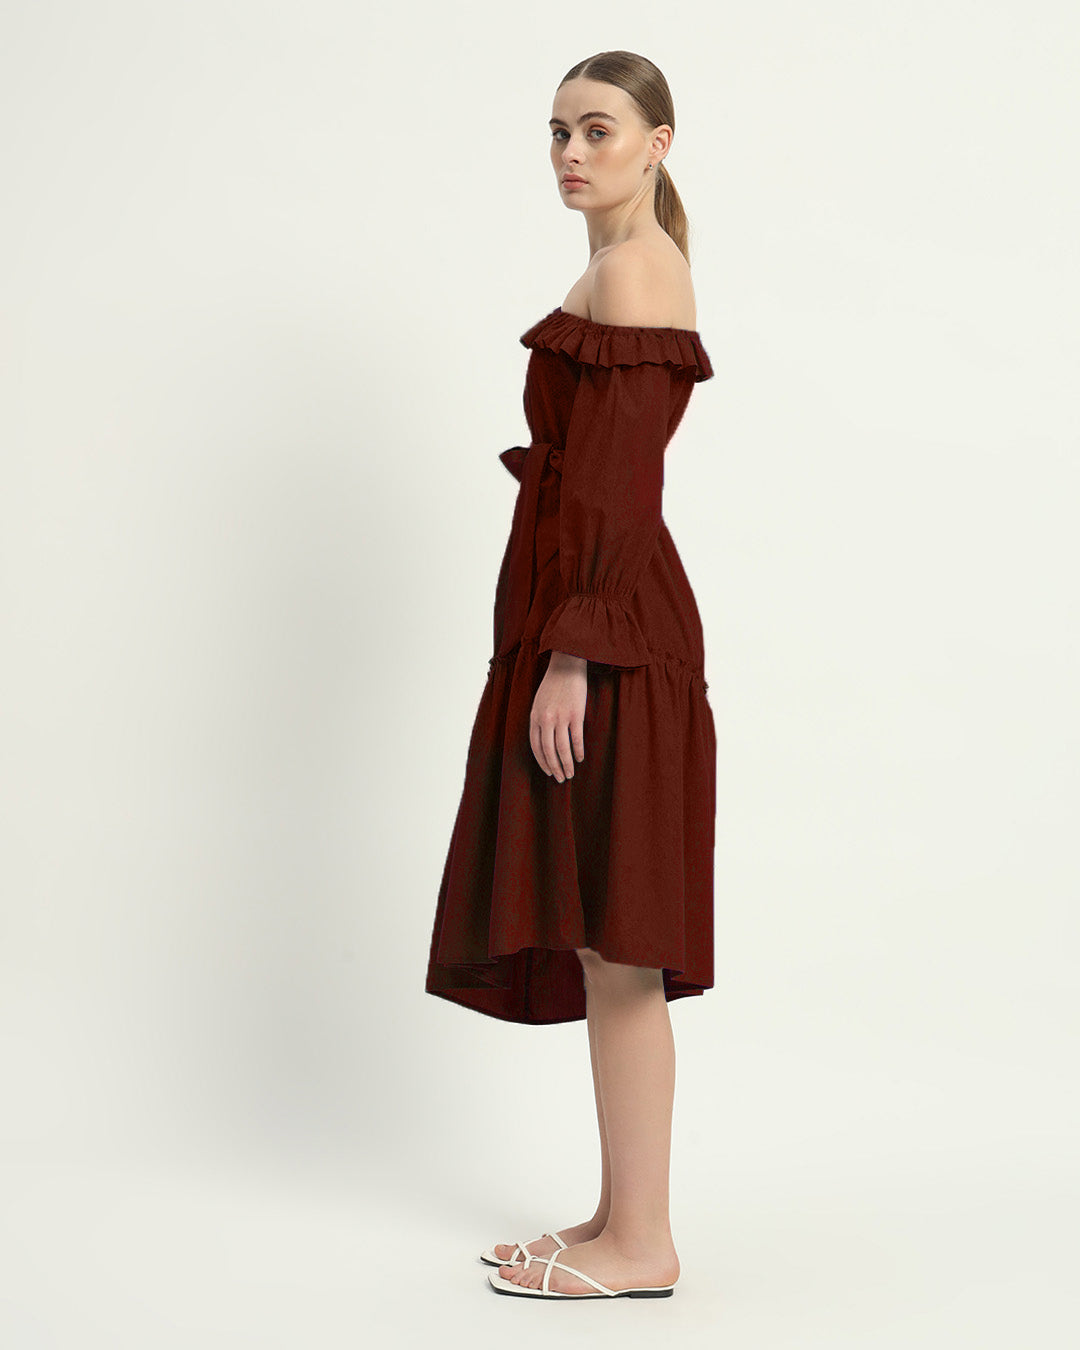 The Stellata Rouge Cotton Dress